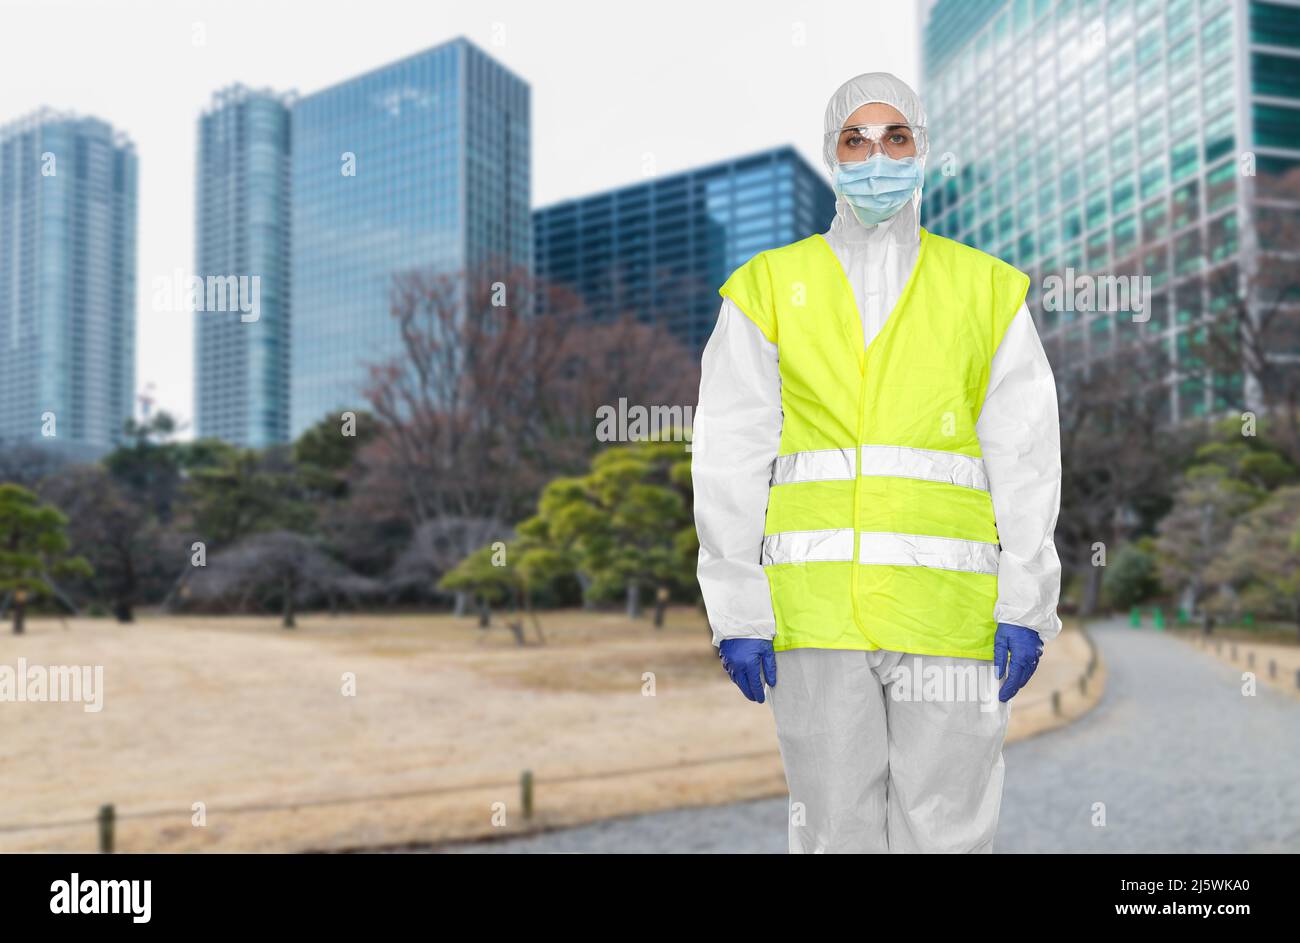 healthcare or sanitation worker in hazmat suit Stock Photo